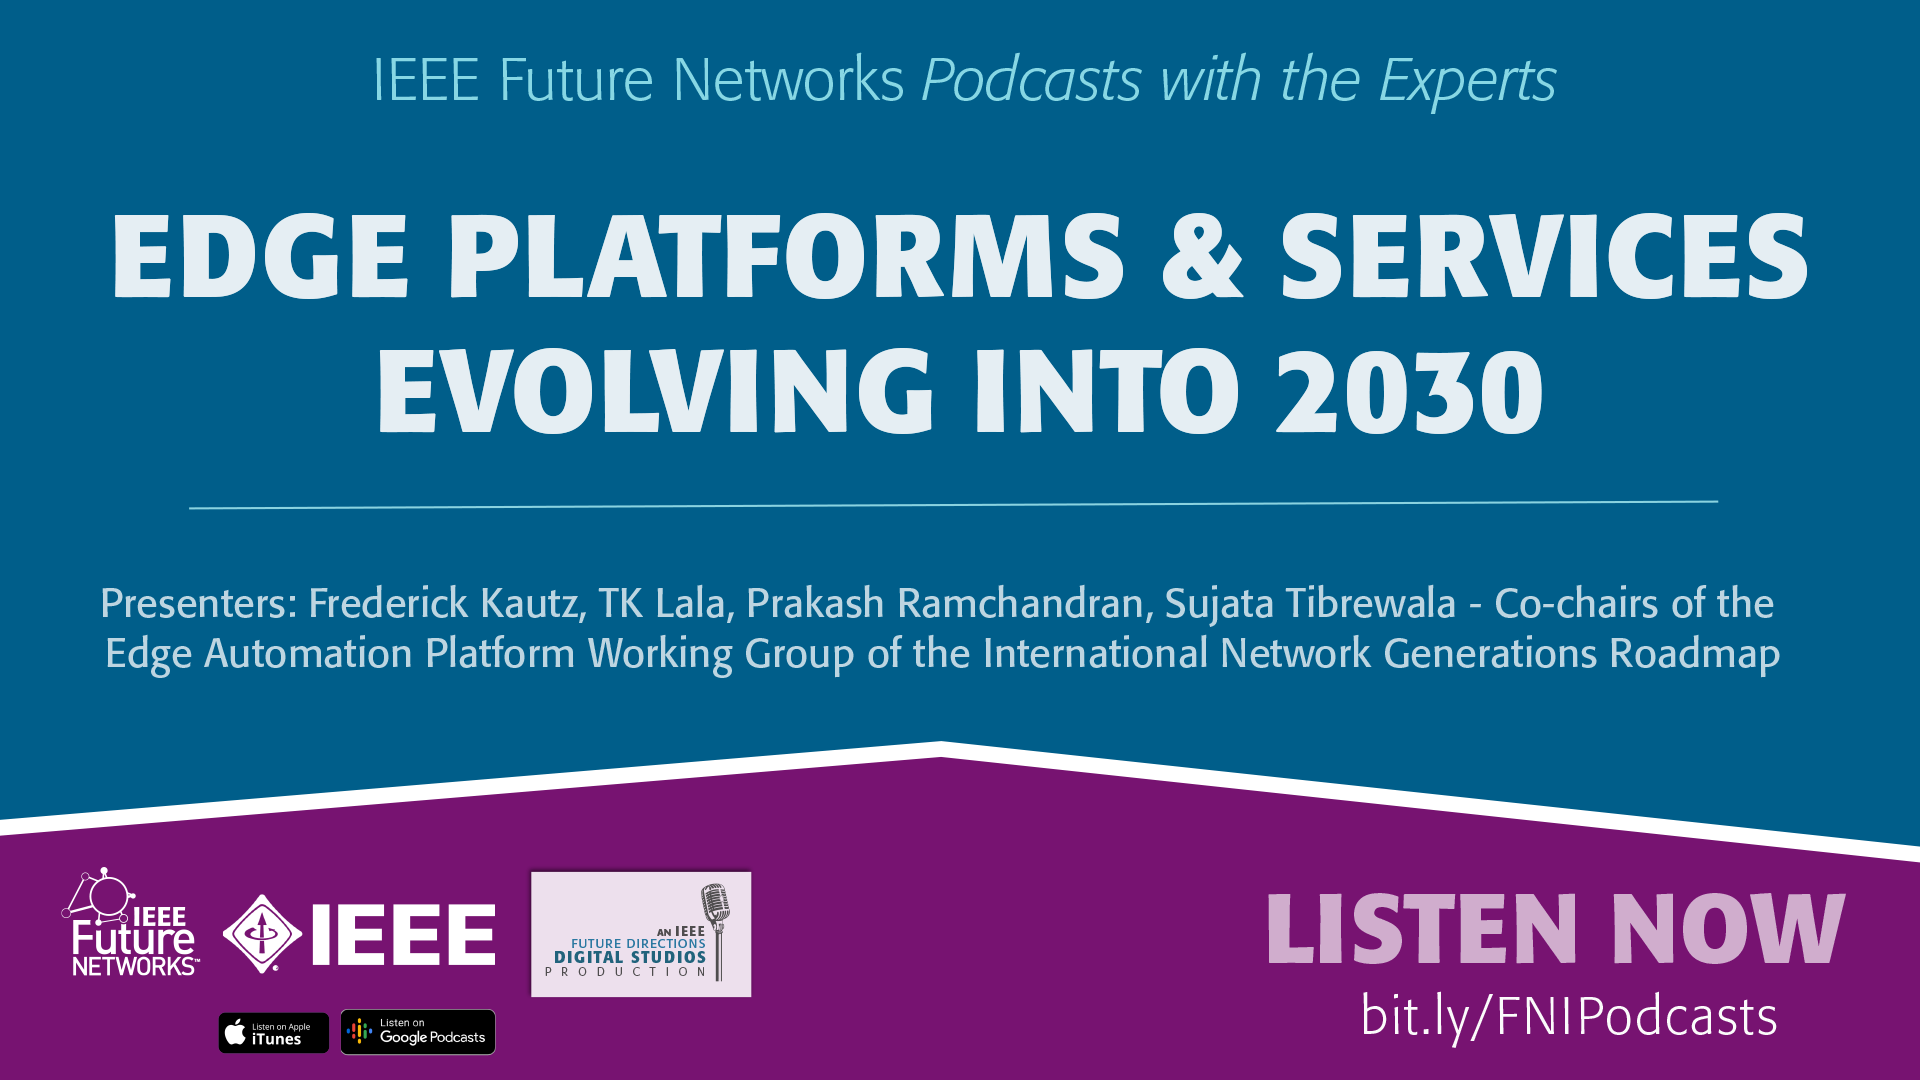 FNPodcast INGR Edge Platforms 2030 ieeetv